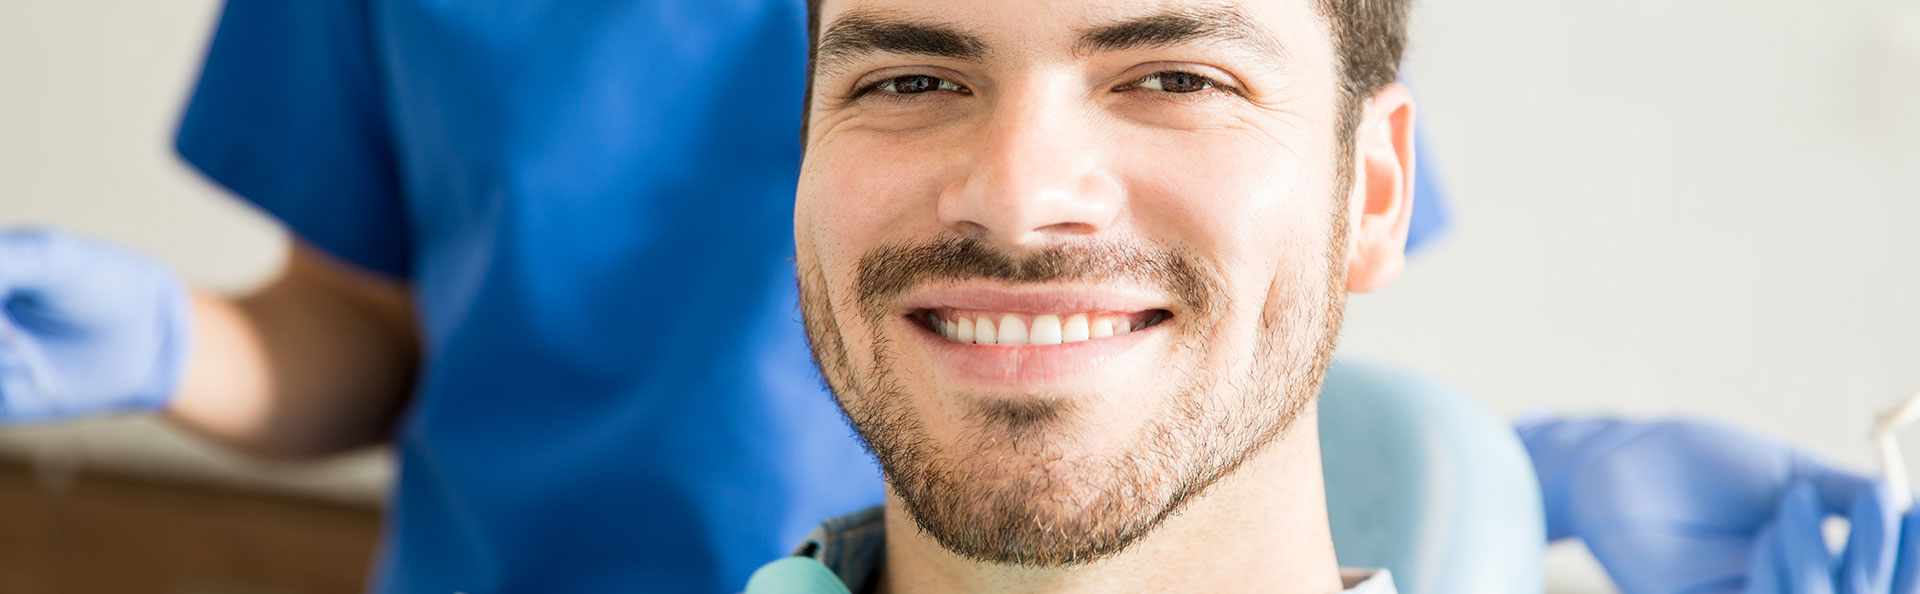 Man smiling after dental crowns treatment